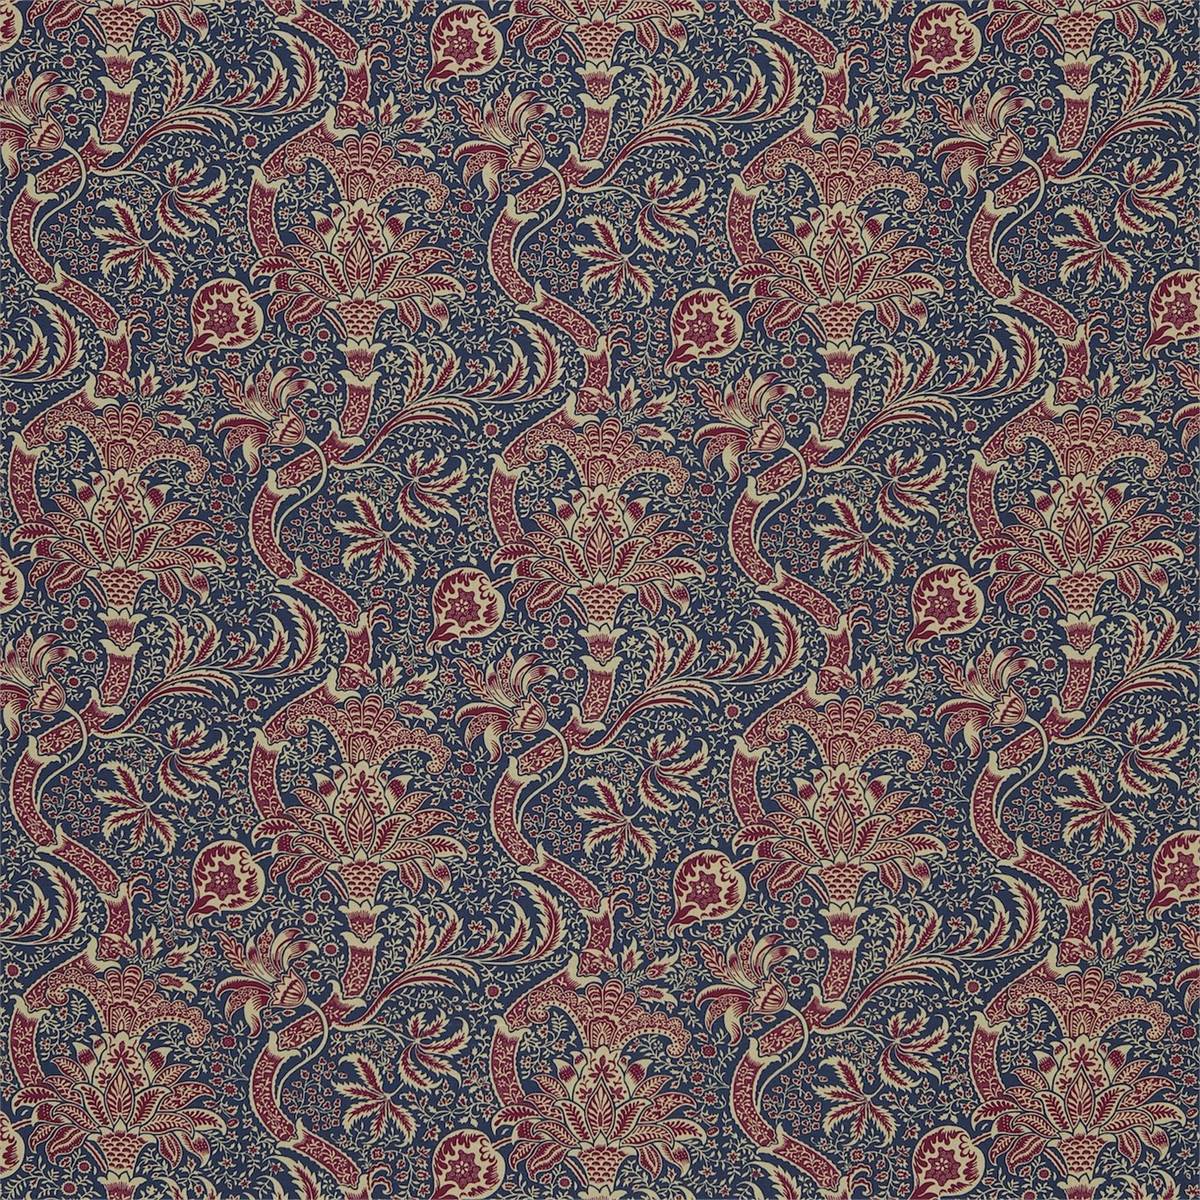 Indian Indigo/Red Fabric by William Morris & Co.